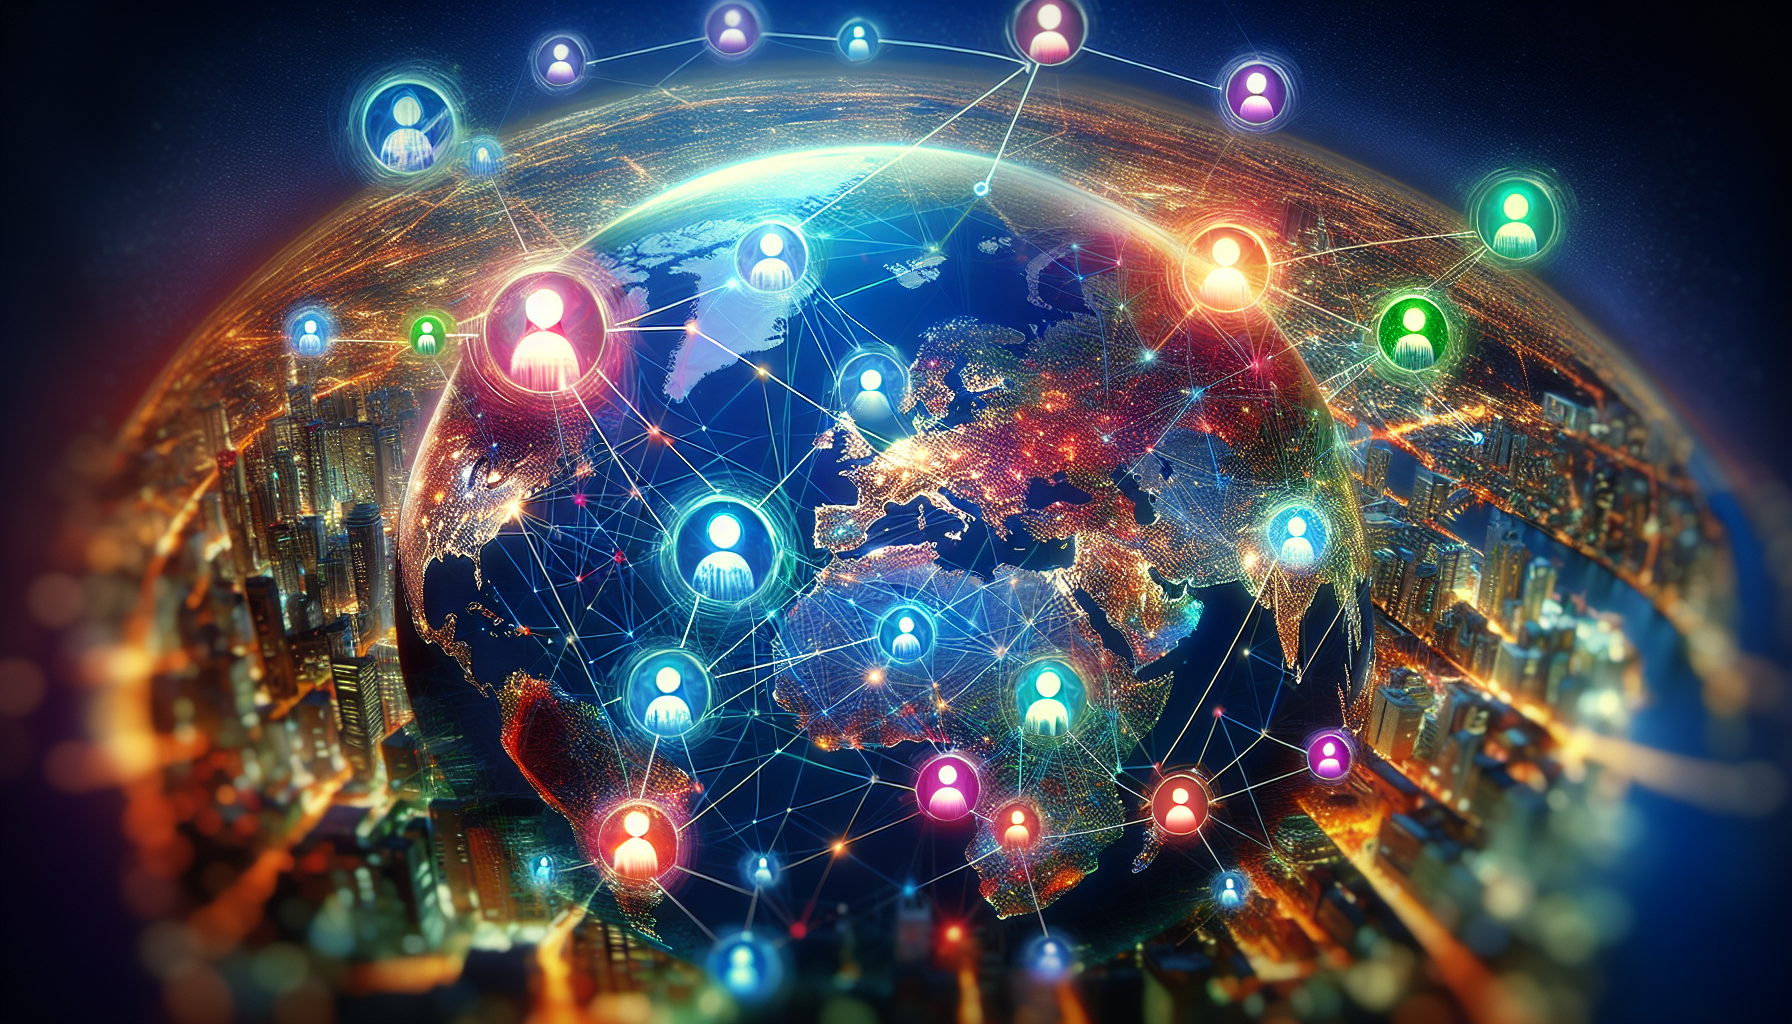 Illustration of global collaboration through virtual communication tools